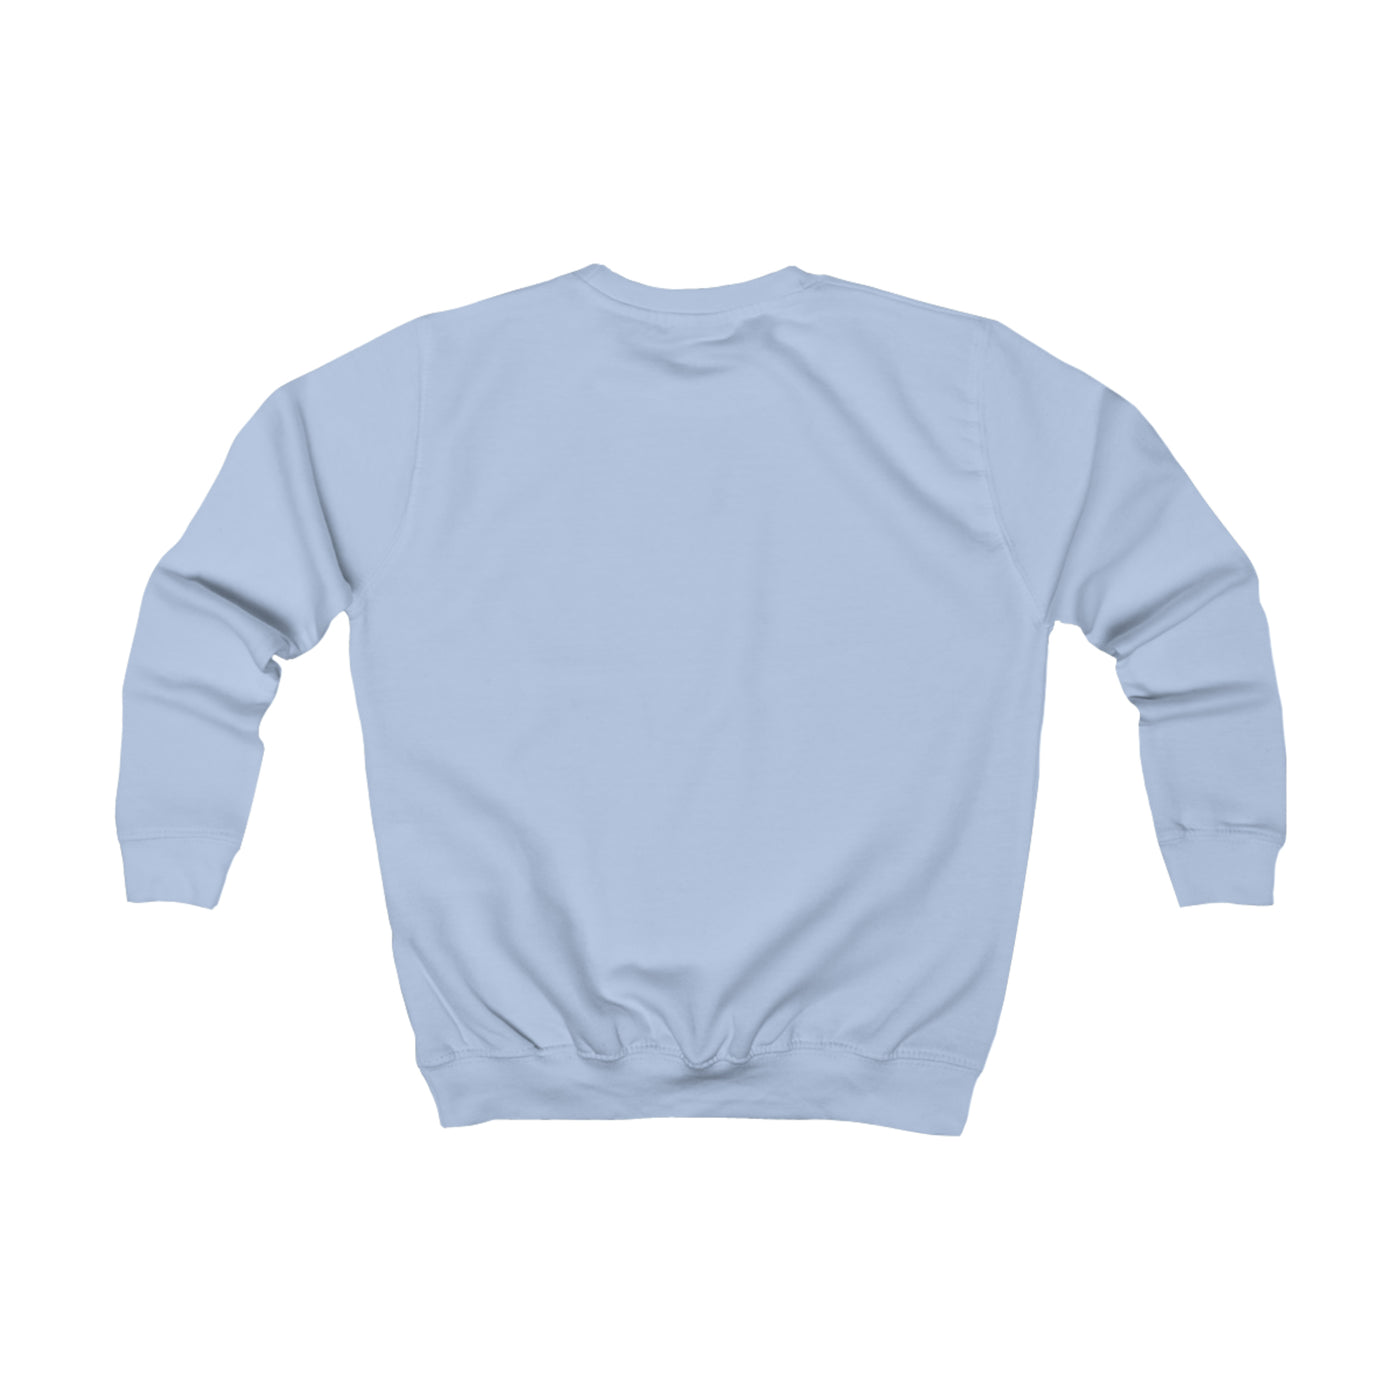 King Moore World Kids Sweatshirt Blue Name (9Colors)